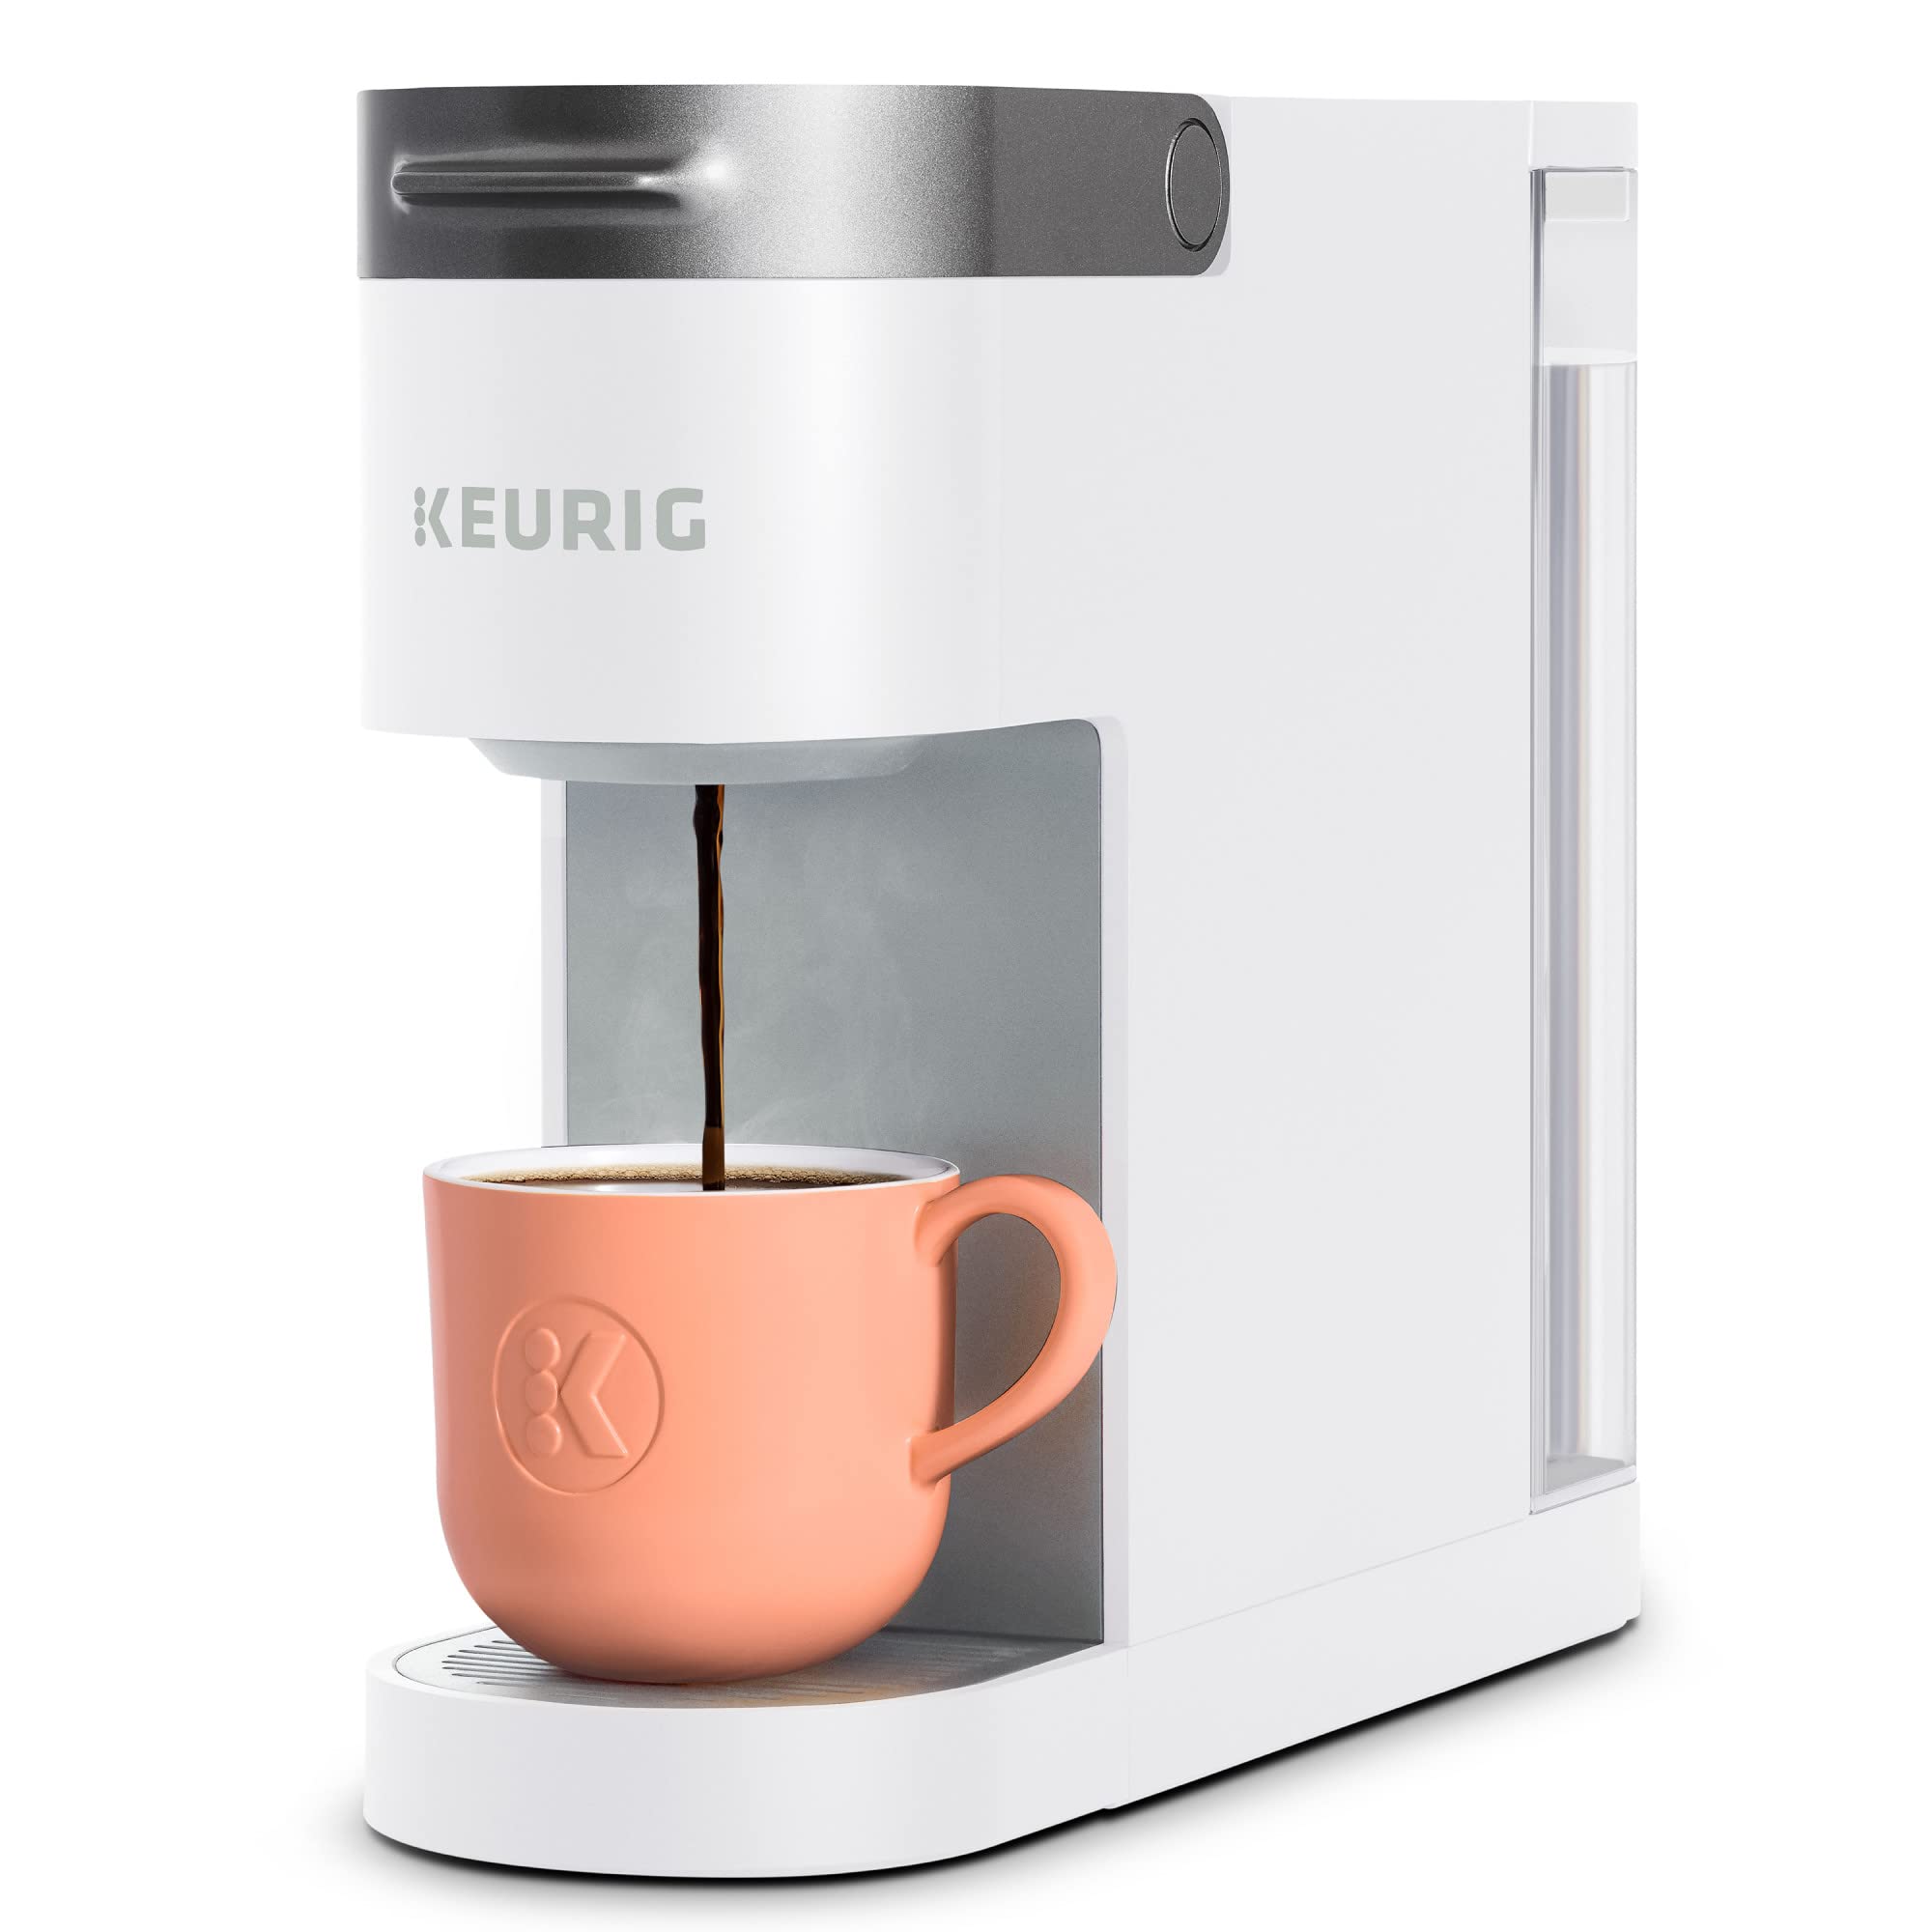 Keurig K-スリムシングルサーブKカップポッドコーヒーメーカー、マルチストリームテクノロジー、ホワイト